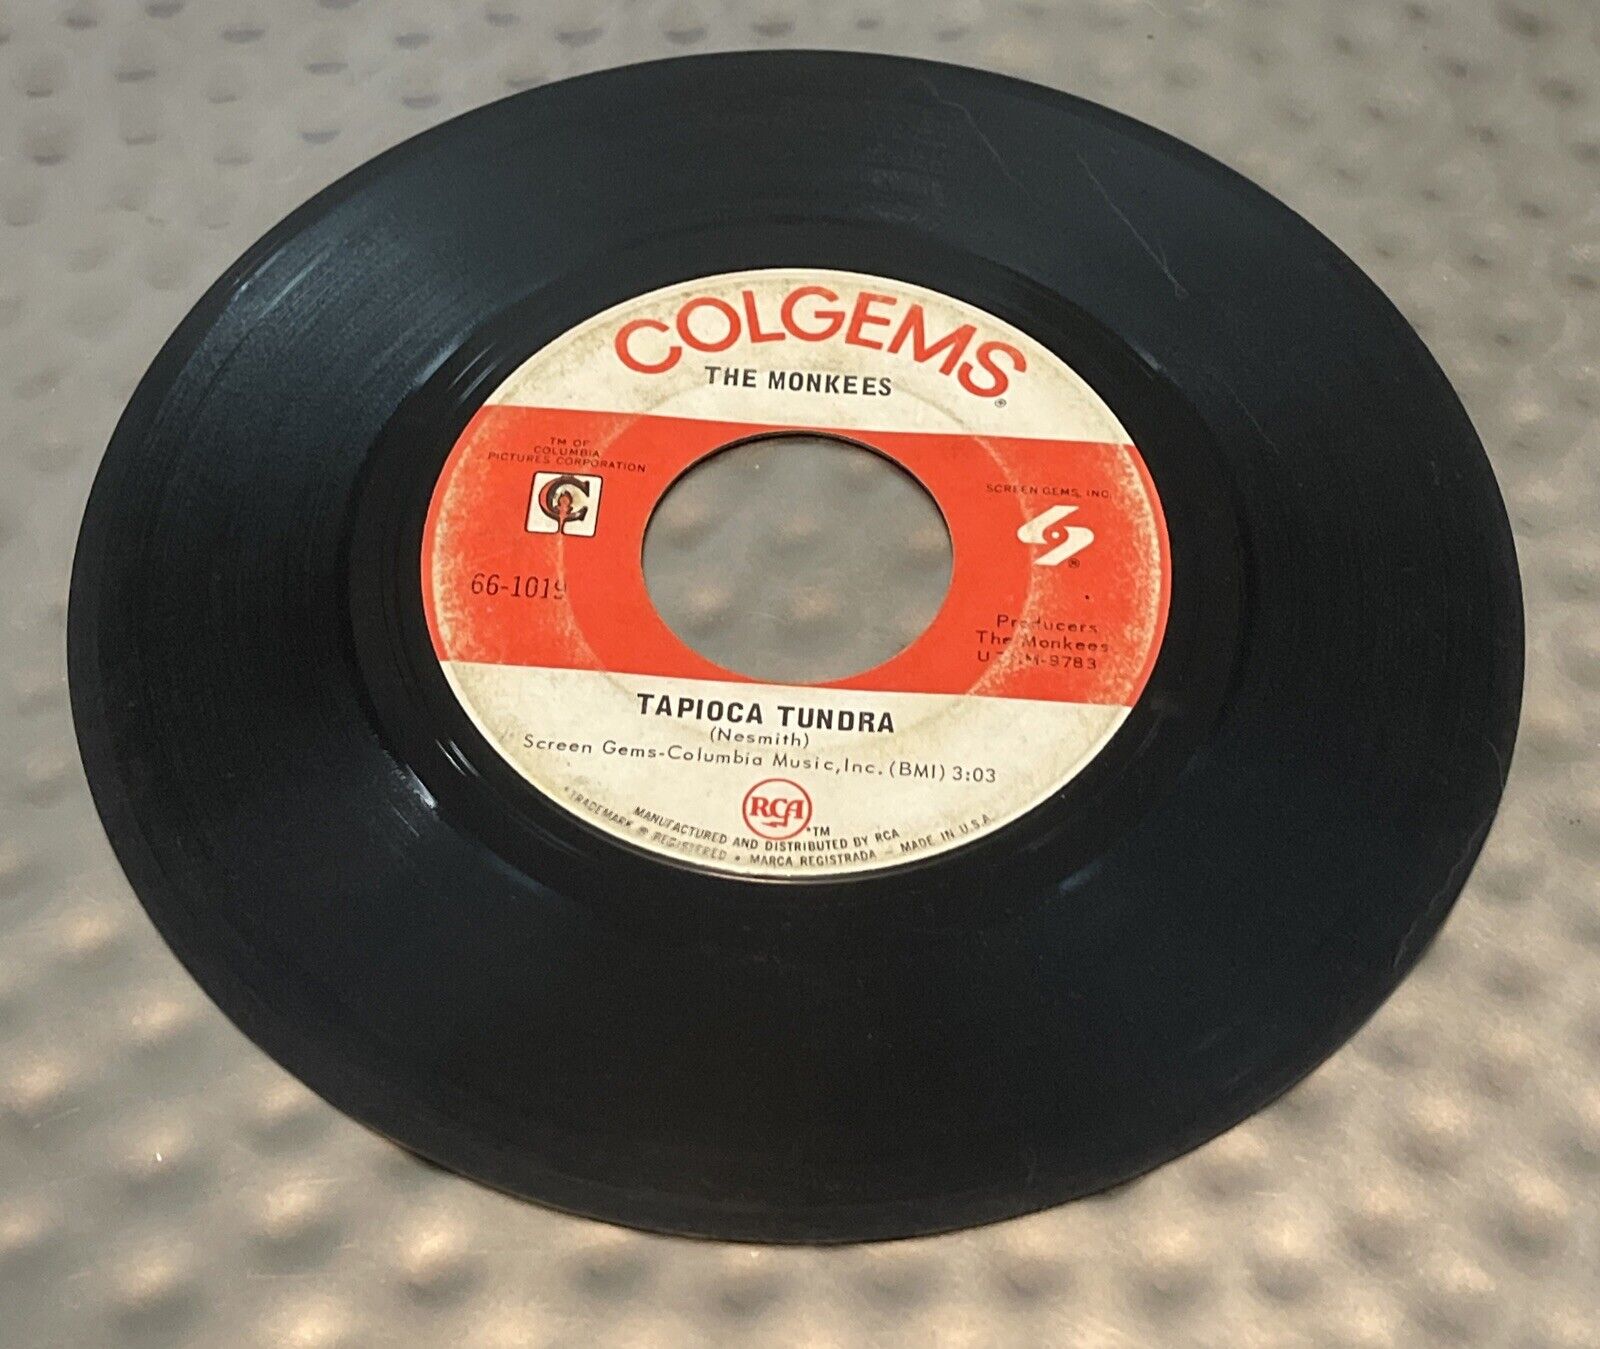 45 RPM 7" Record The Monkees Valleri & Tapioca Tundra Colgems Records 66-1019